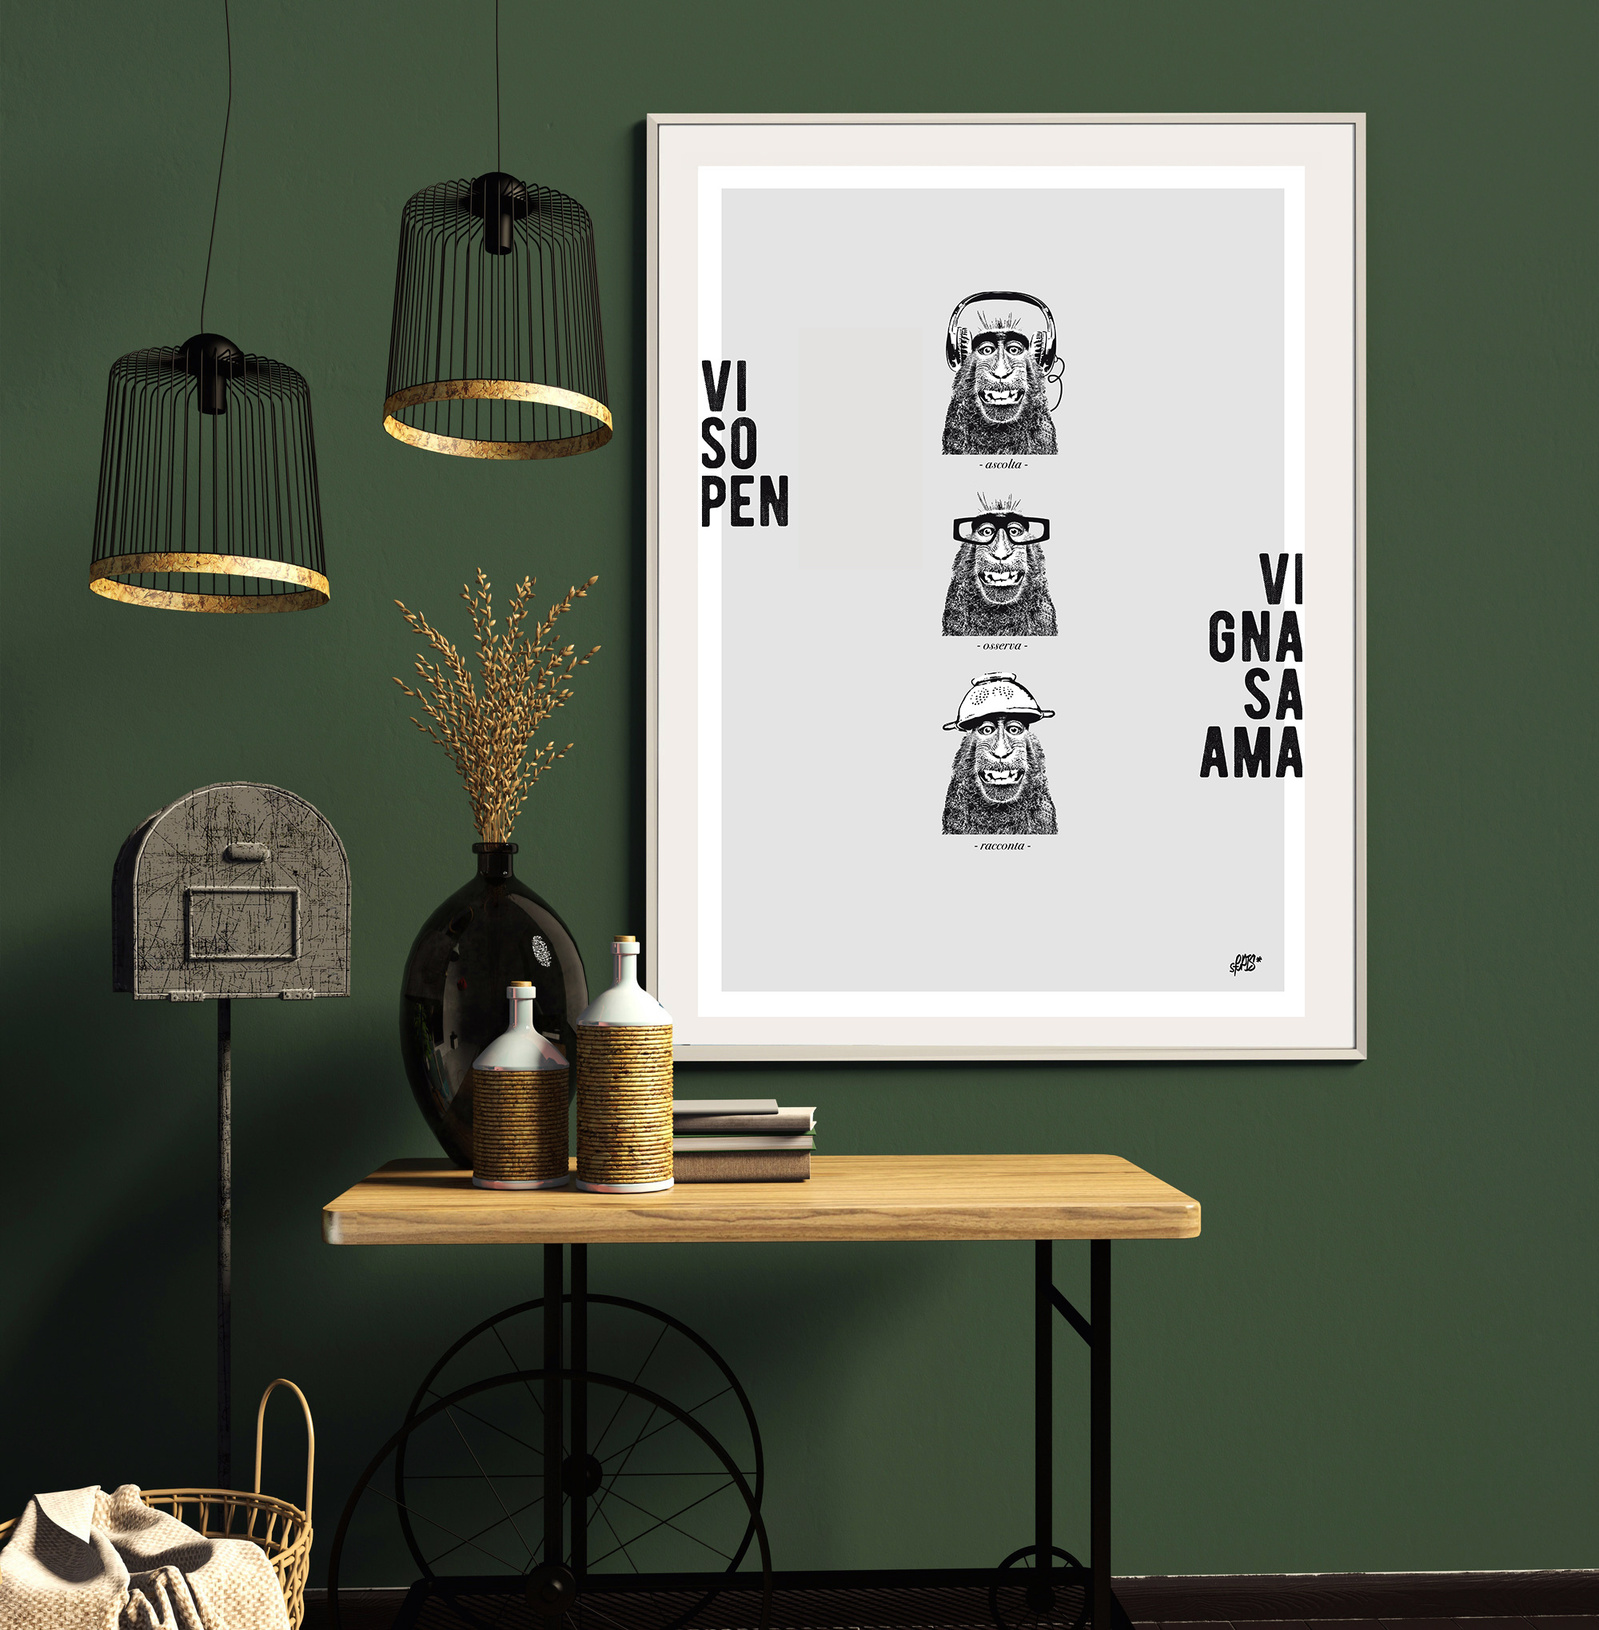 #stefanoepis #3monkey #lovedesign #posterdesign #coolgraphicdesign #nonvedononsentononparlo